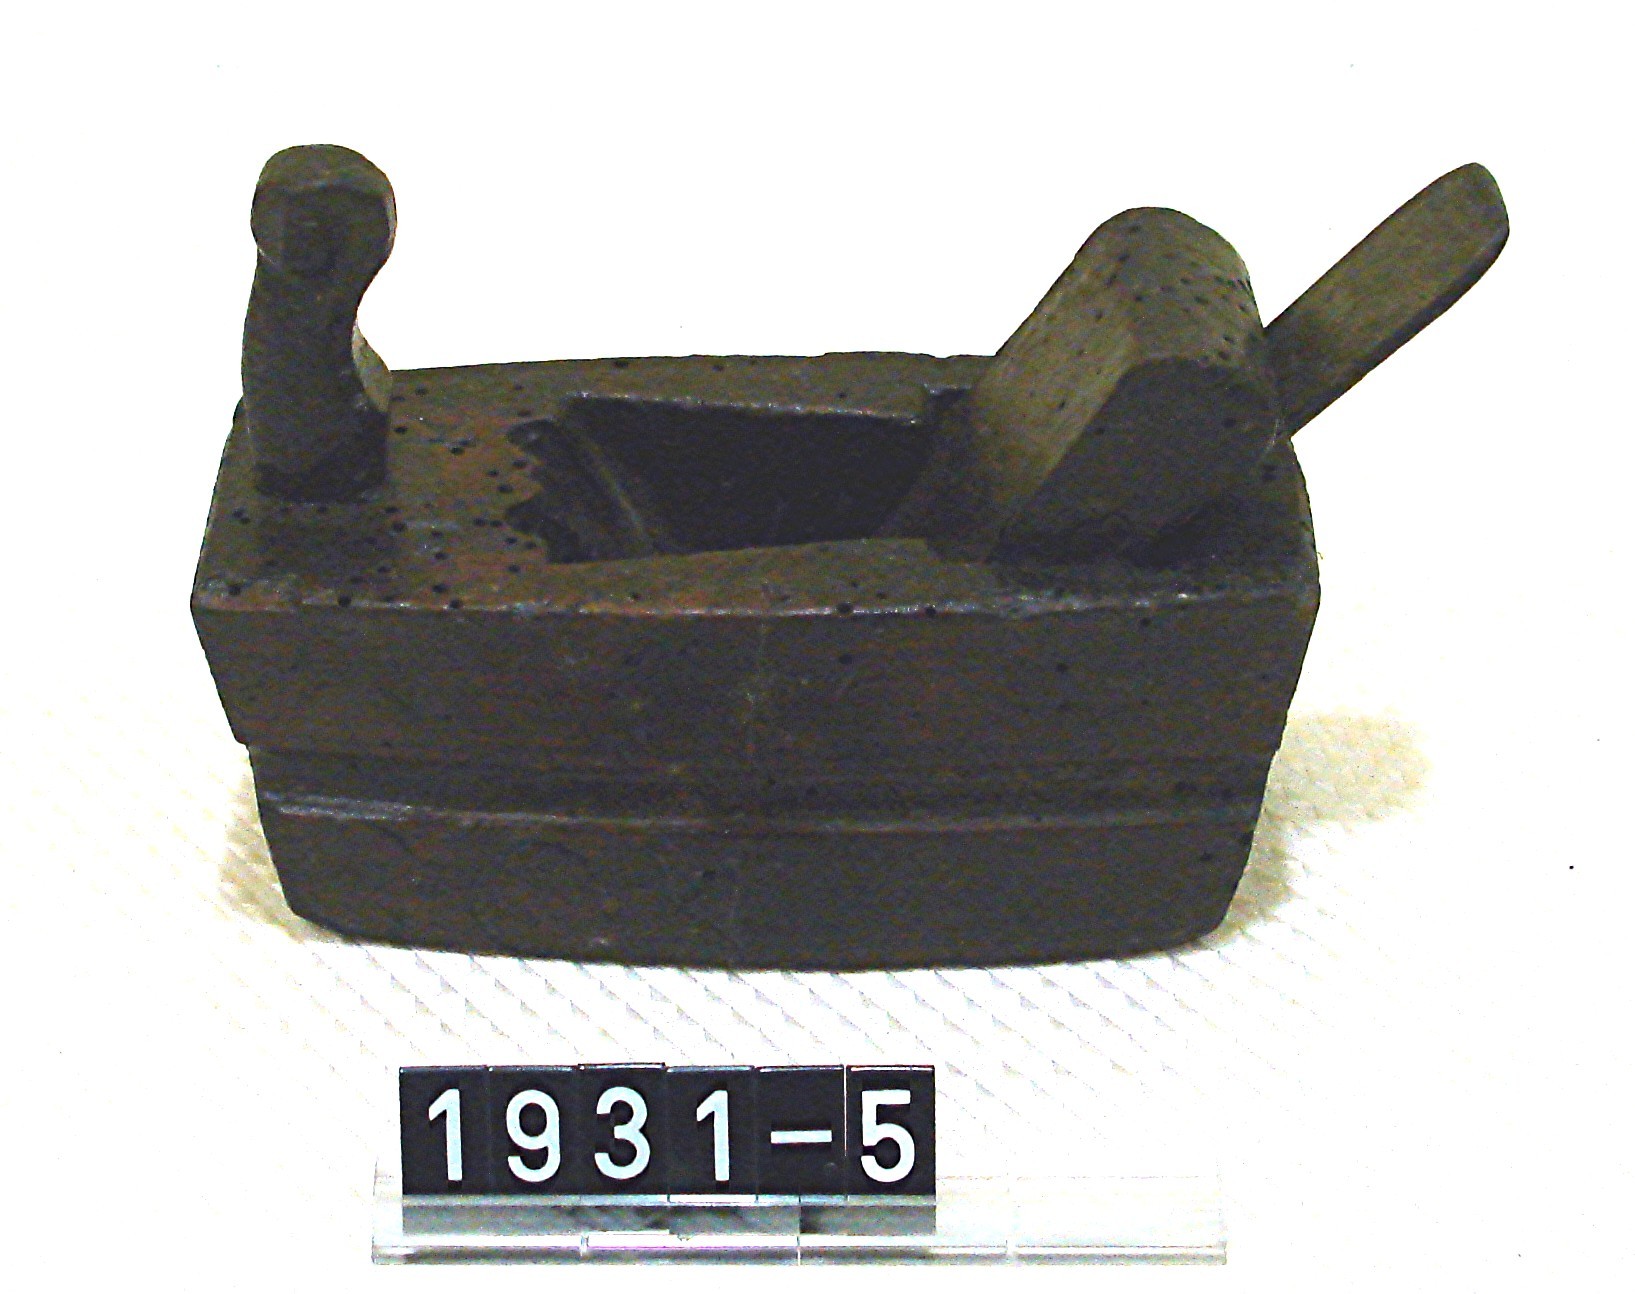 Küferhandwerkszeug aus Eisen/Holz; Handhobel; Küferhobel; 18. Jh. (Stadtmuseum Bad Dürkheim, Museumsgesellschaft Bad Dürkheim e.V. CC BY-NC-SA)